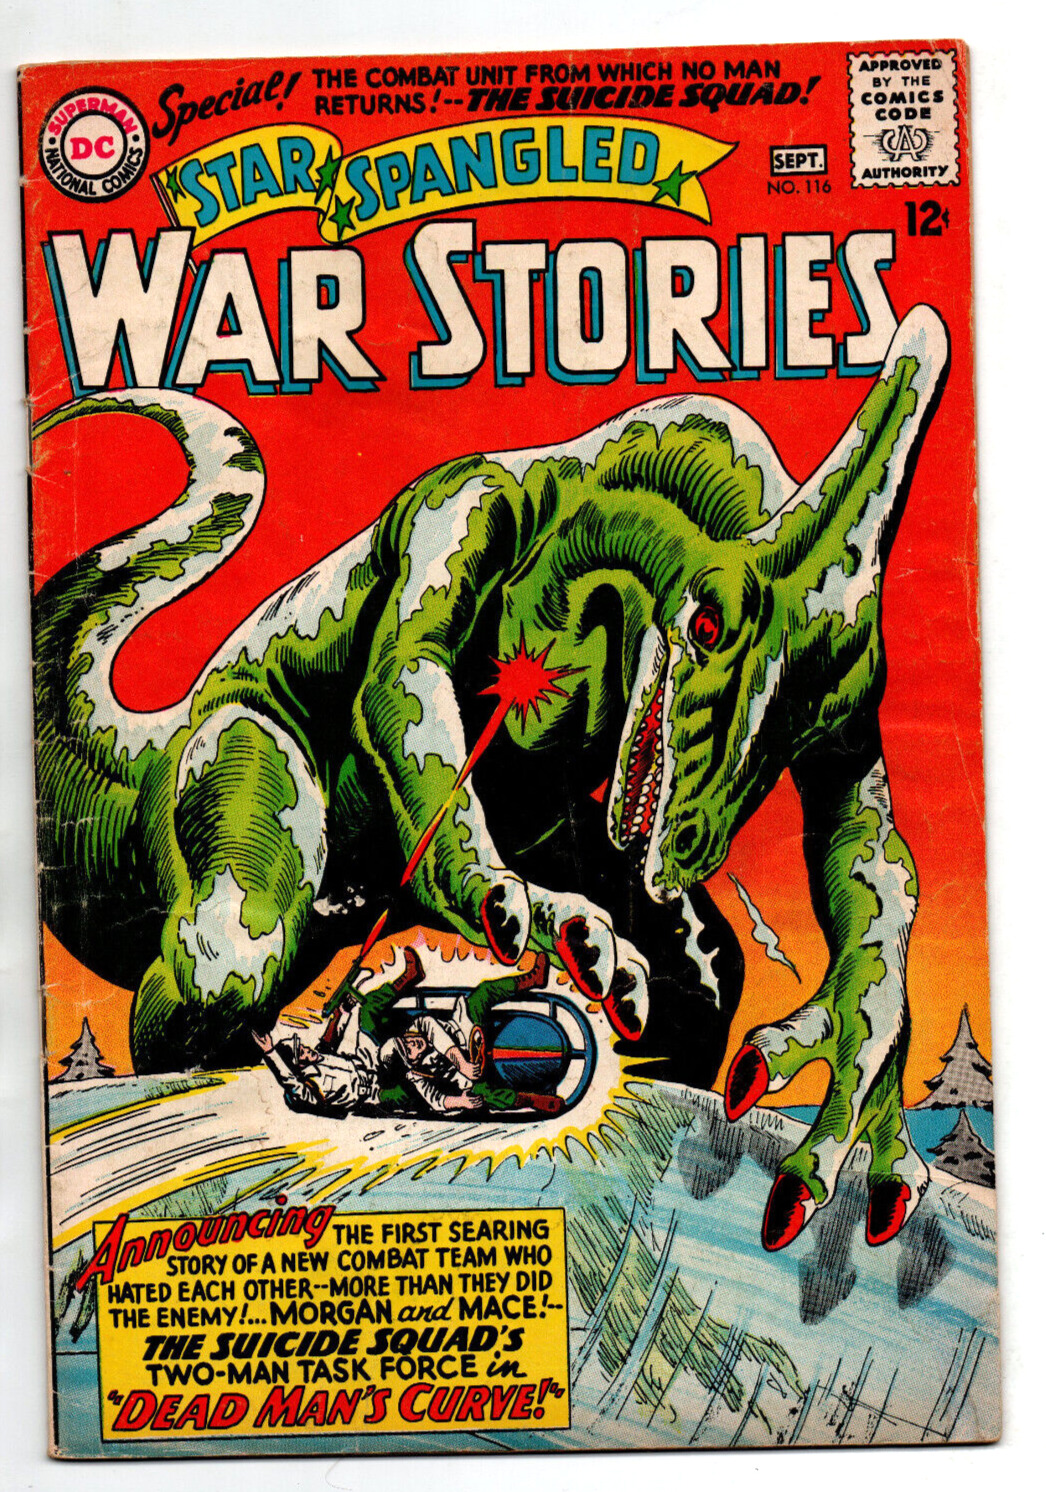 Star Spangled War Stories #112 - Dinosaur cover - 1964 - VG